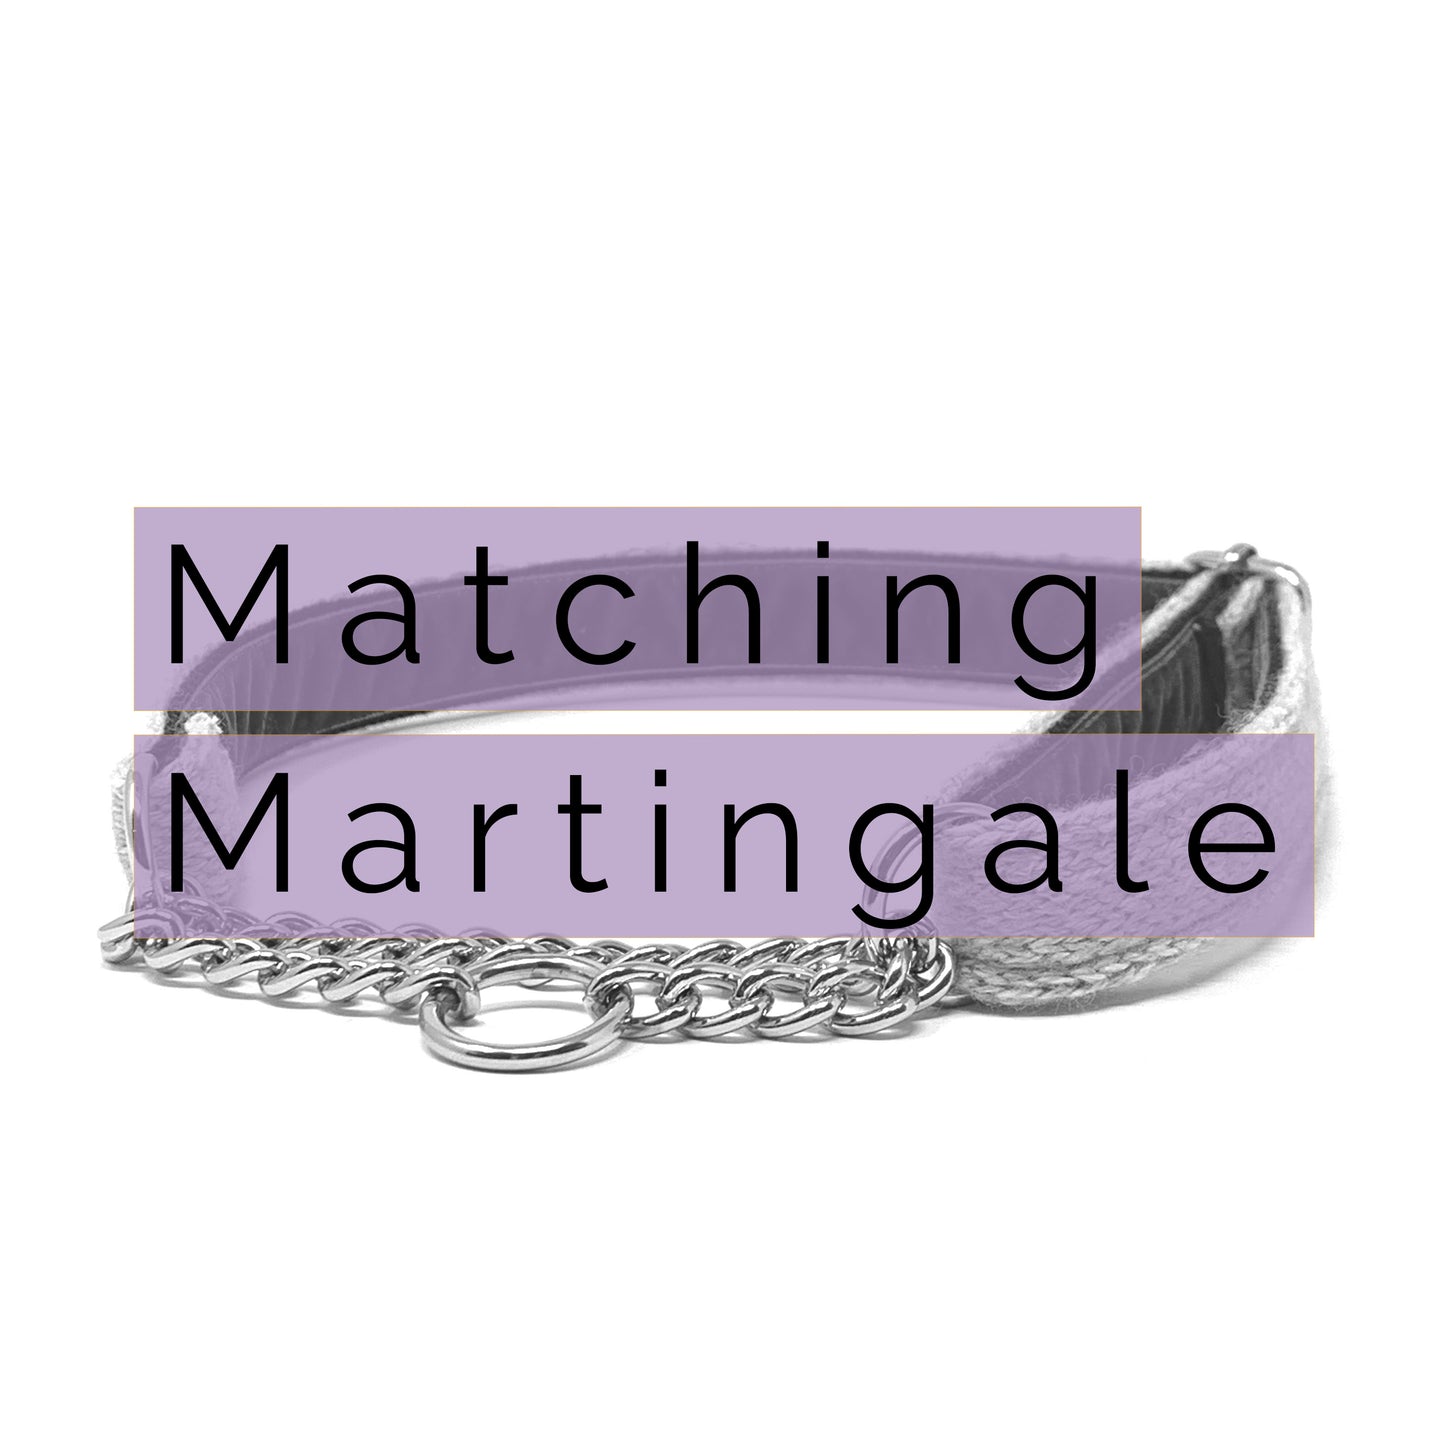 Matching Martingale Dog Collar